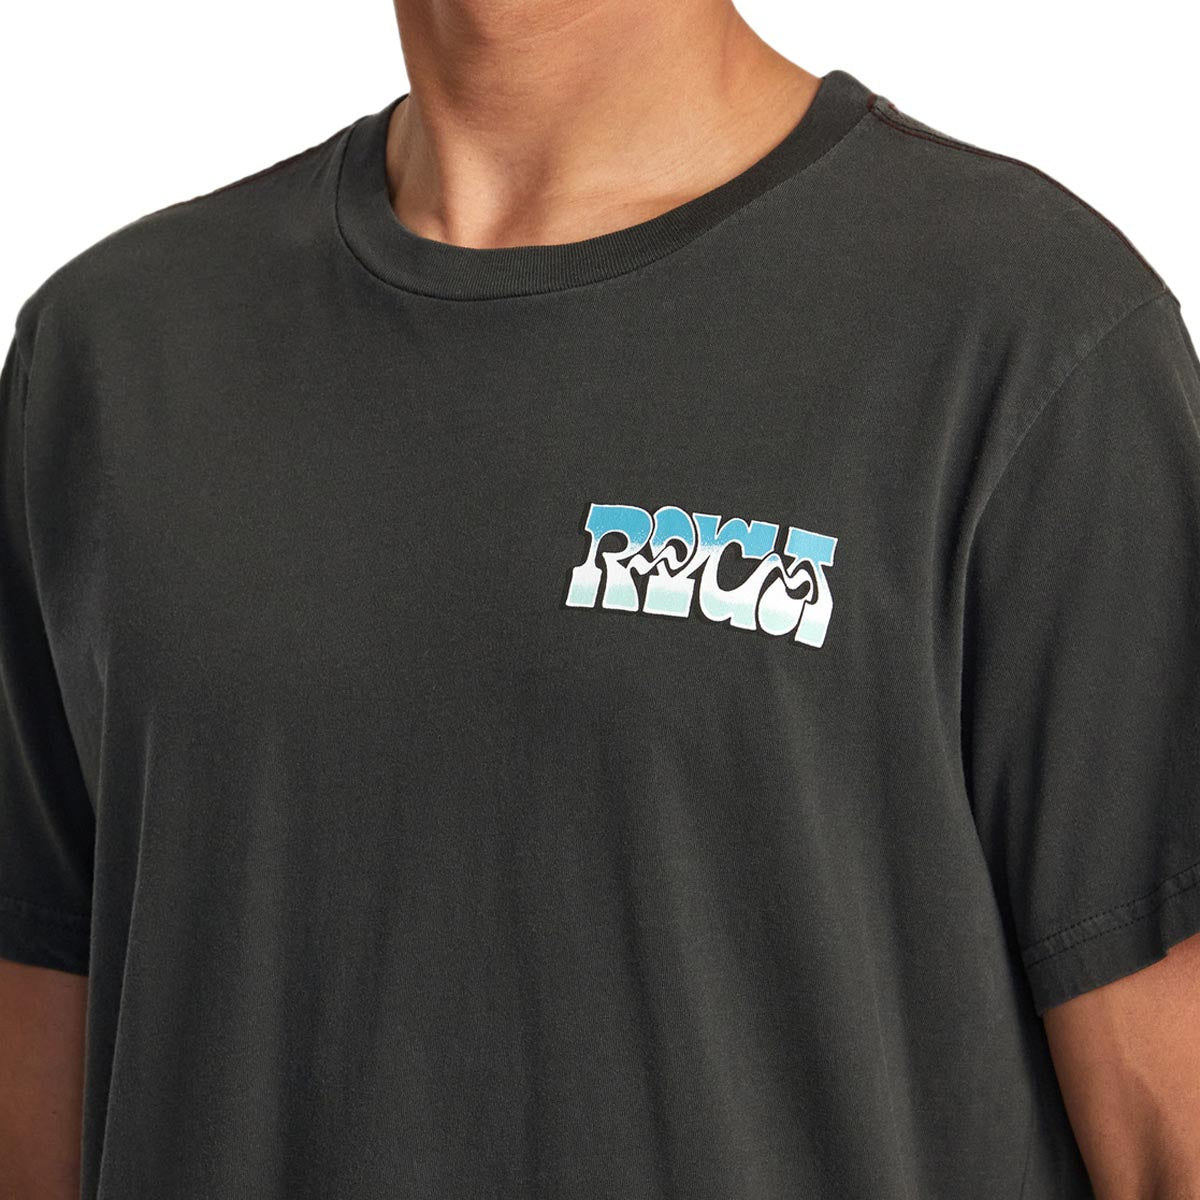 RVCA Resort Technica T-Shirt - Pirate Black image 4